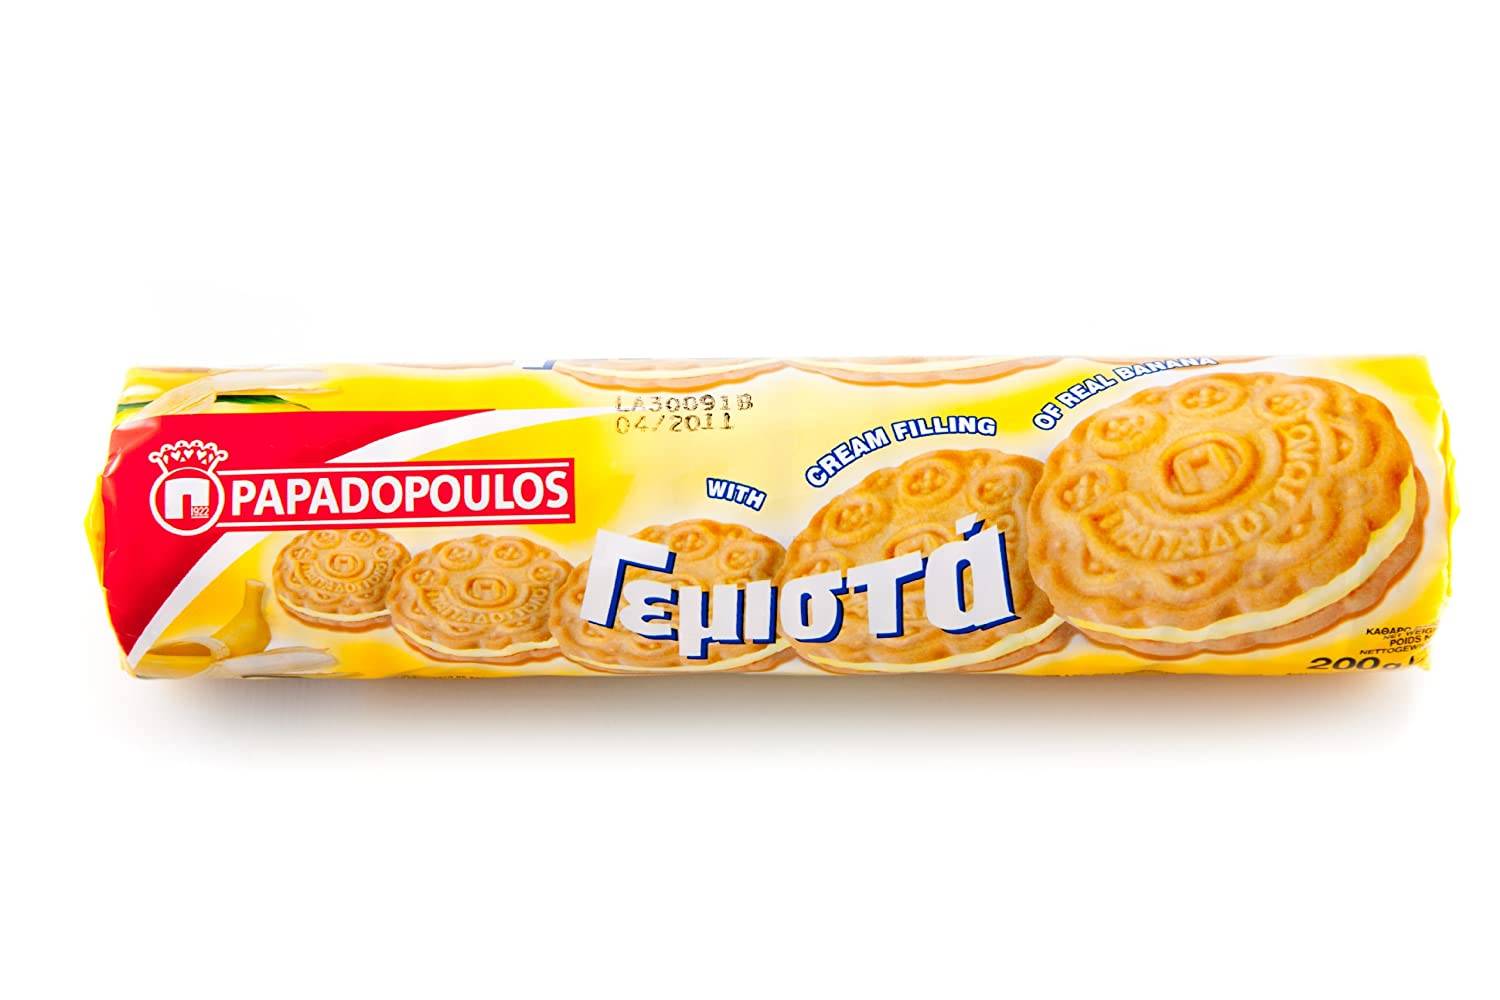 PAPADOPOULOS Banana Cream Sandwich Biscuits 